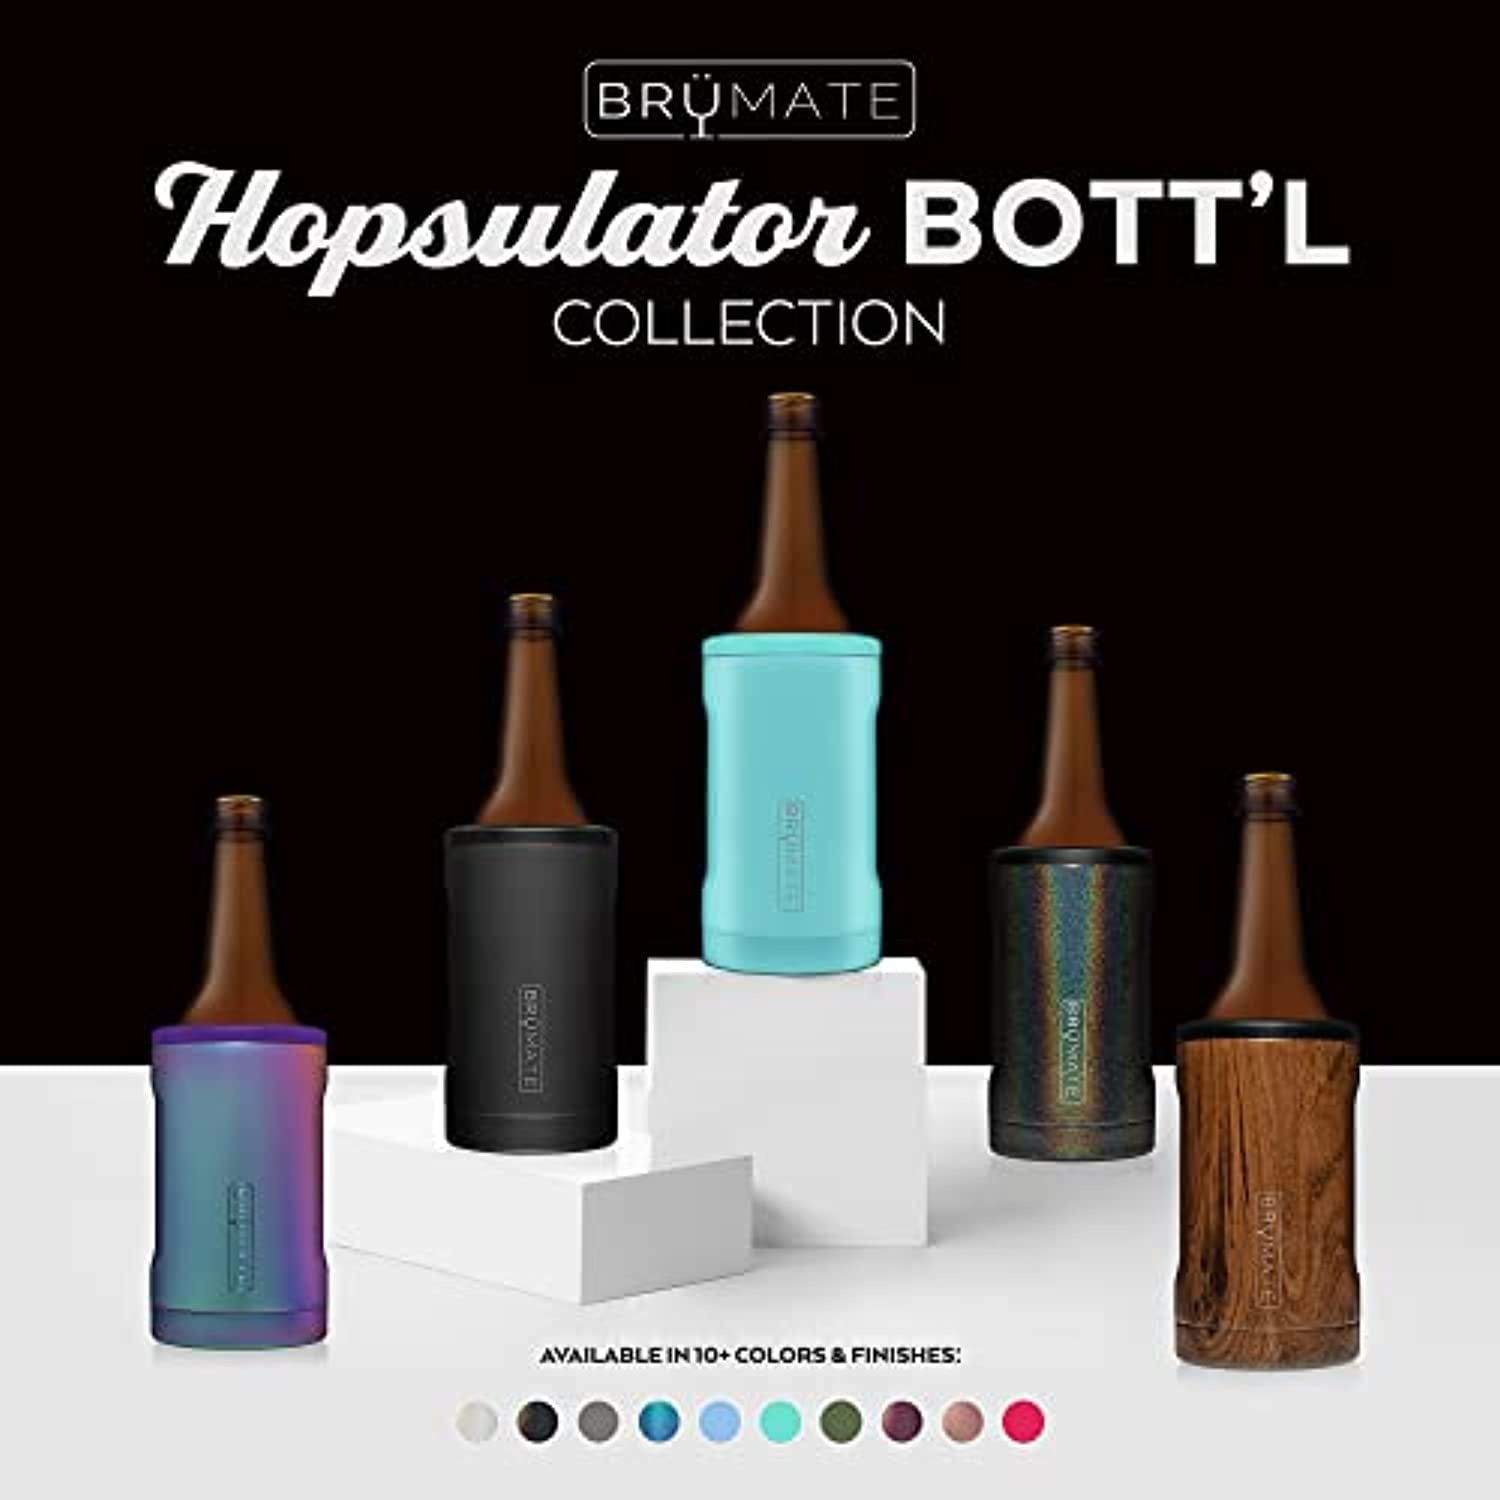  BrüMate Hopsulator Bott'l Insulated Bottle Cooler for Standard  12oz Glass Bottles  Glass Bottle Insulated Stainless Steel Drink Holder  for Beer and Soda (Glitter Charcoal): Home & Kitchen